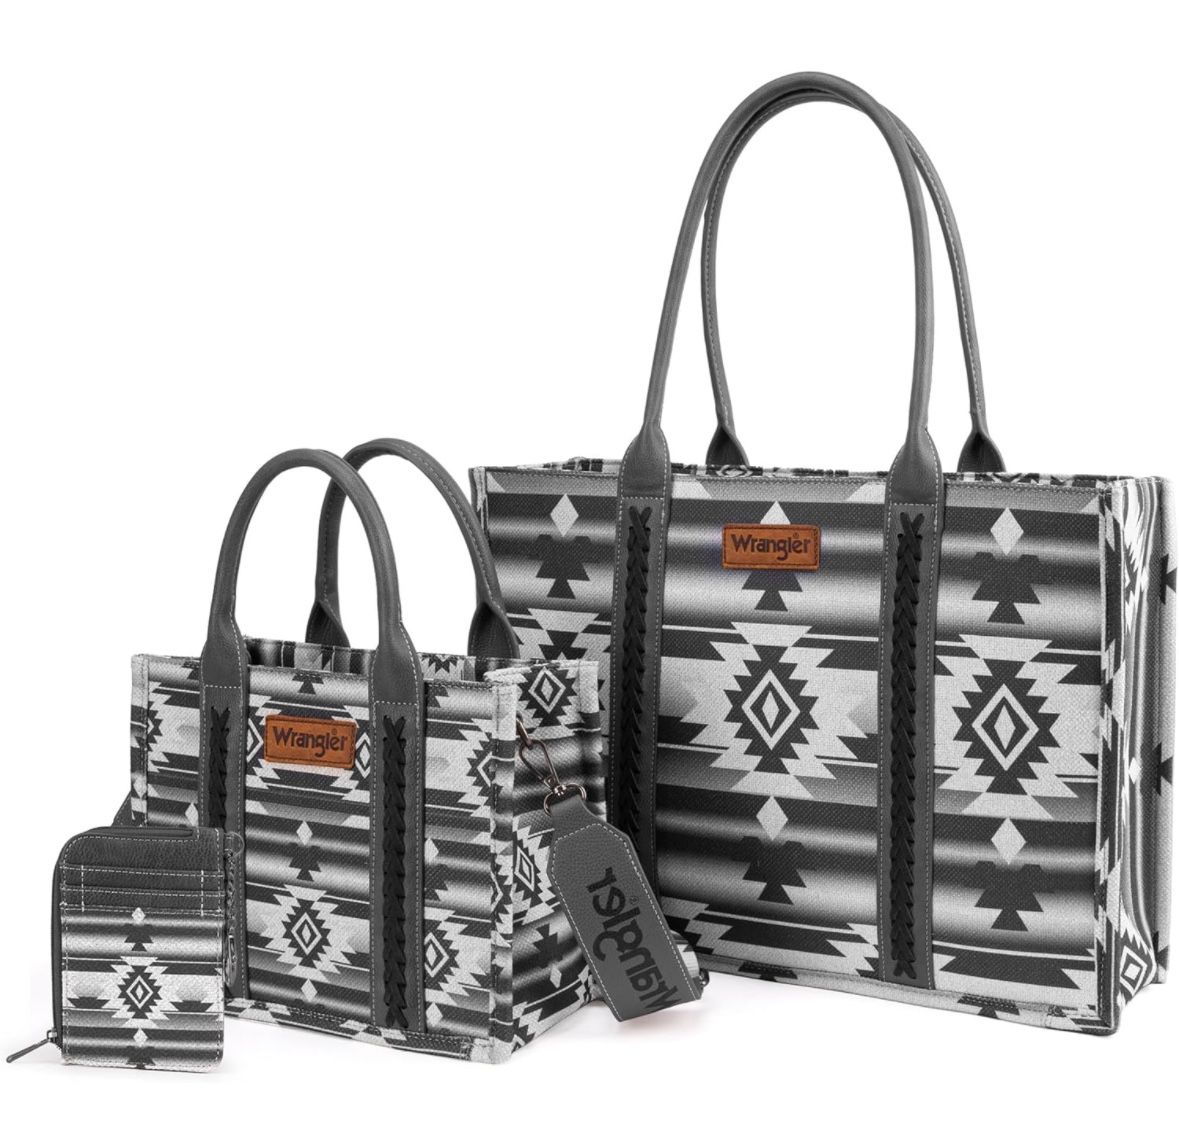 Wrangler Tote Bag for Women Aztec Top Handle Satchel Purse Boho Shoulder Handbags